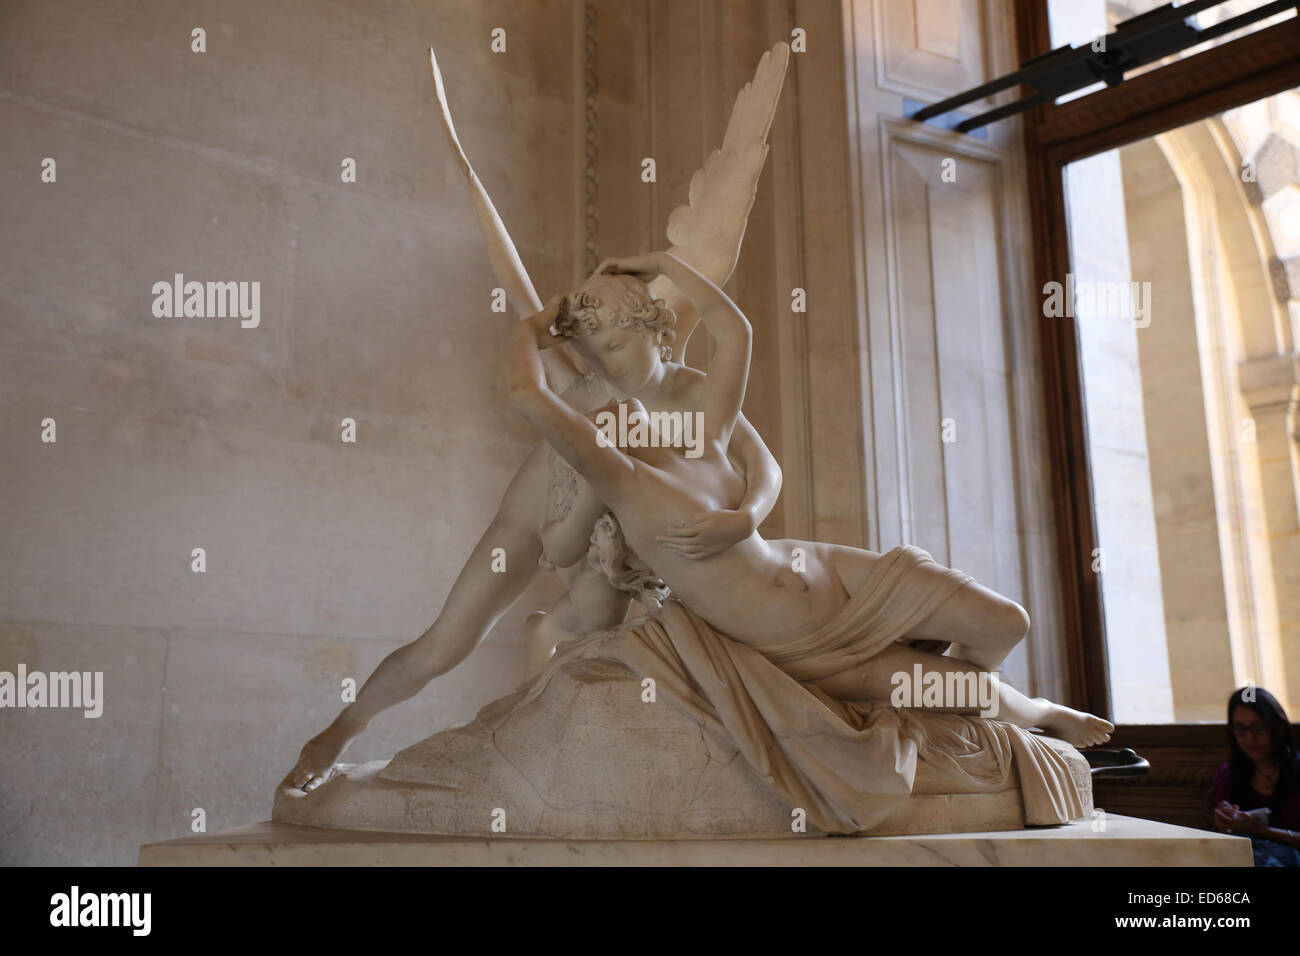 Louvre museum skulptur -Fotos und -Bildmaterial in hoher Auflösung – Alamy